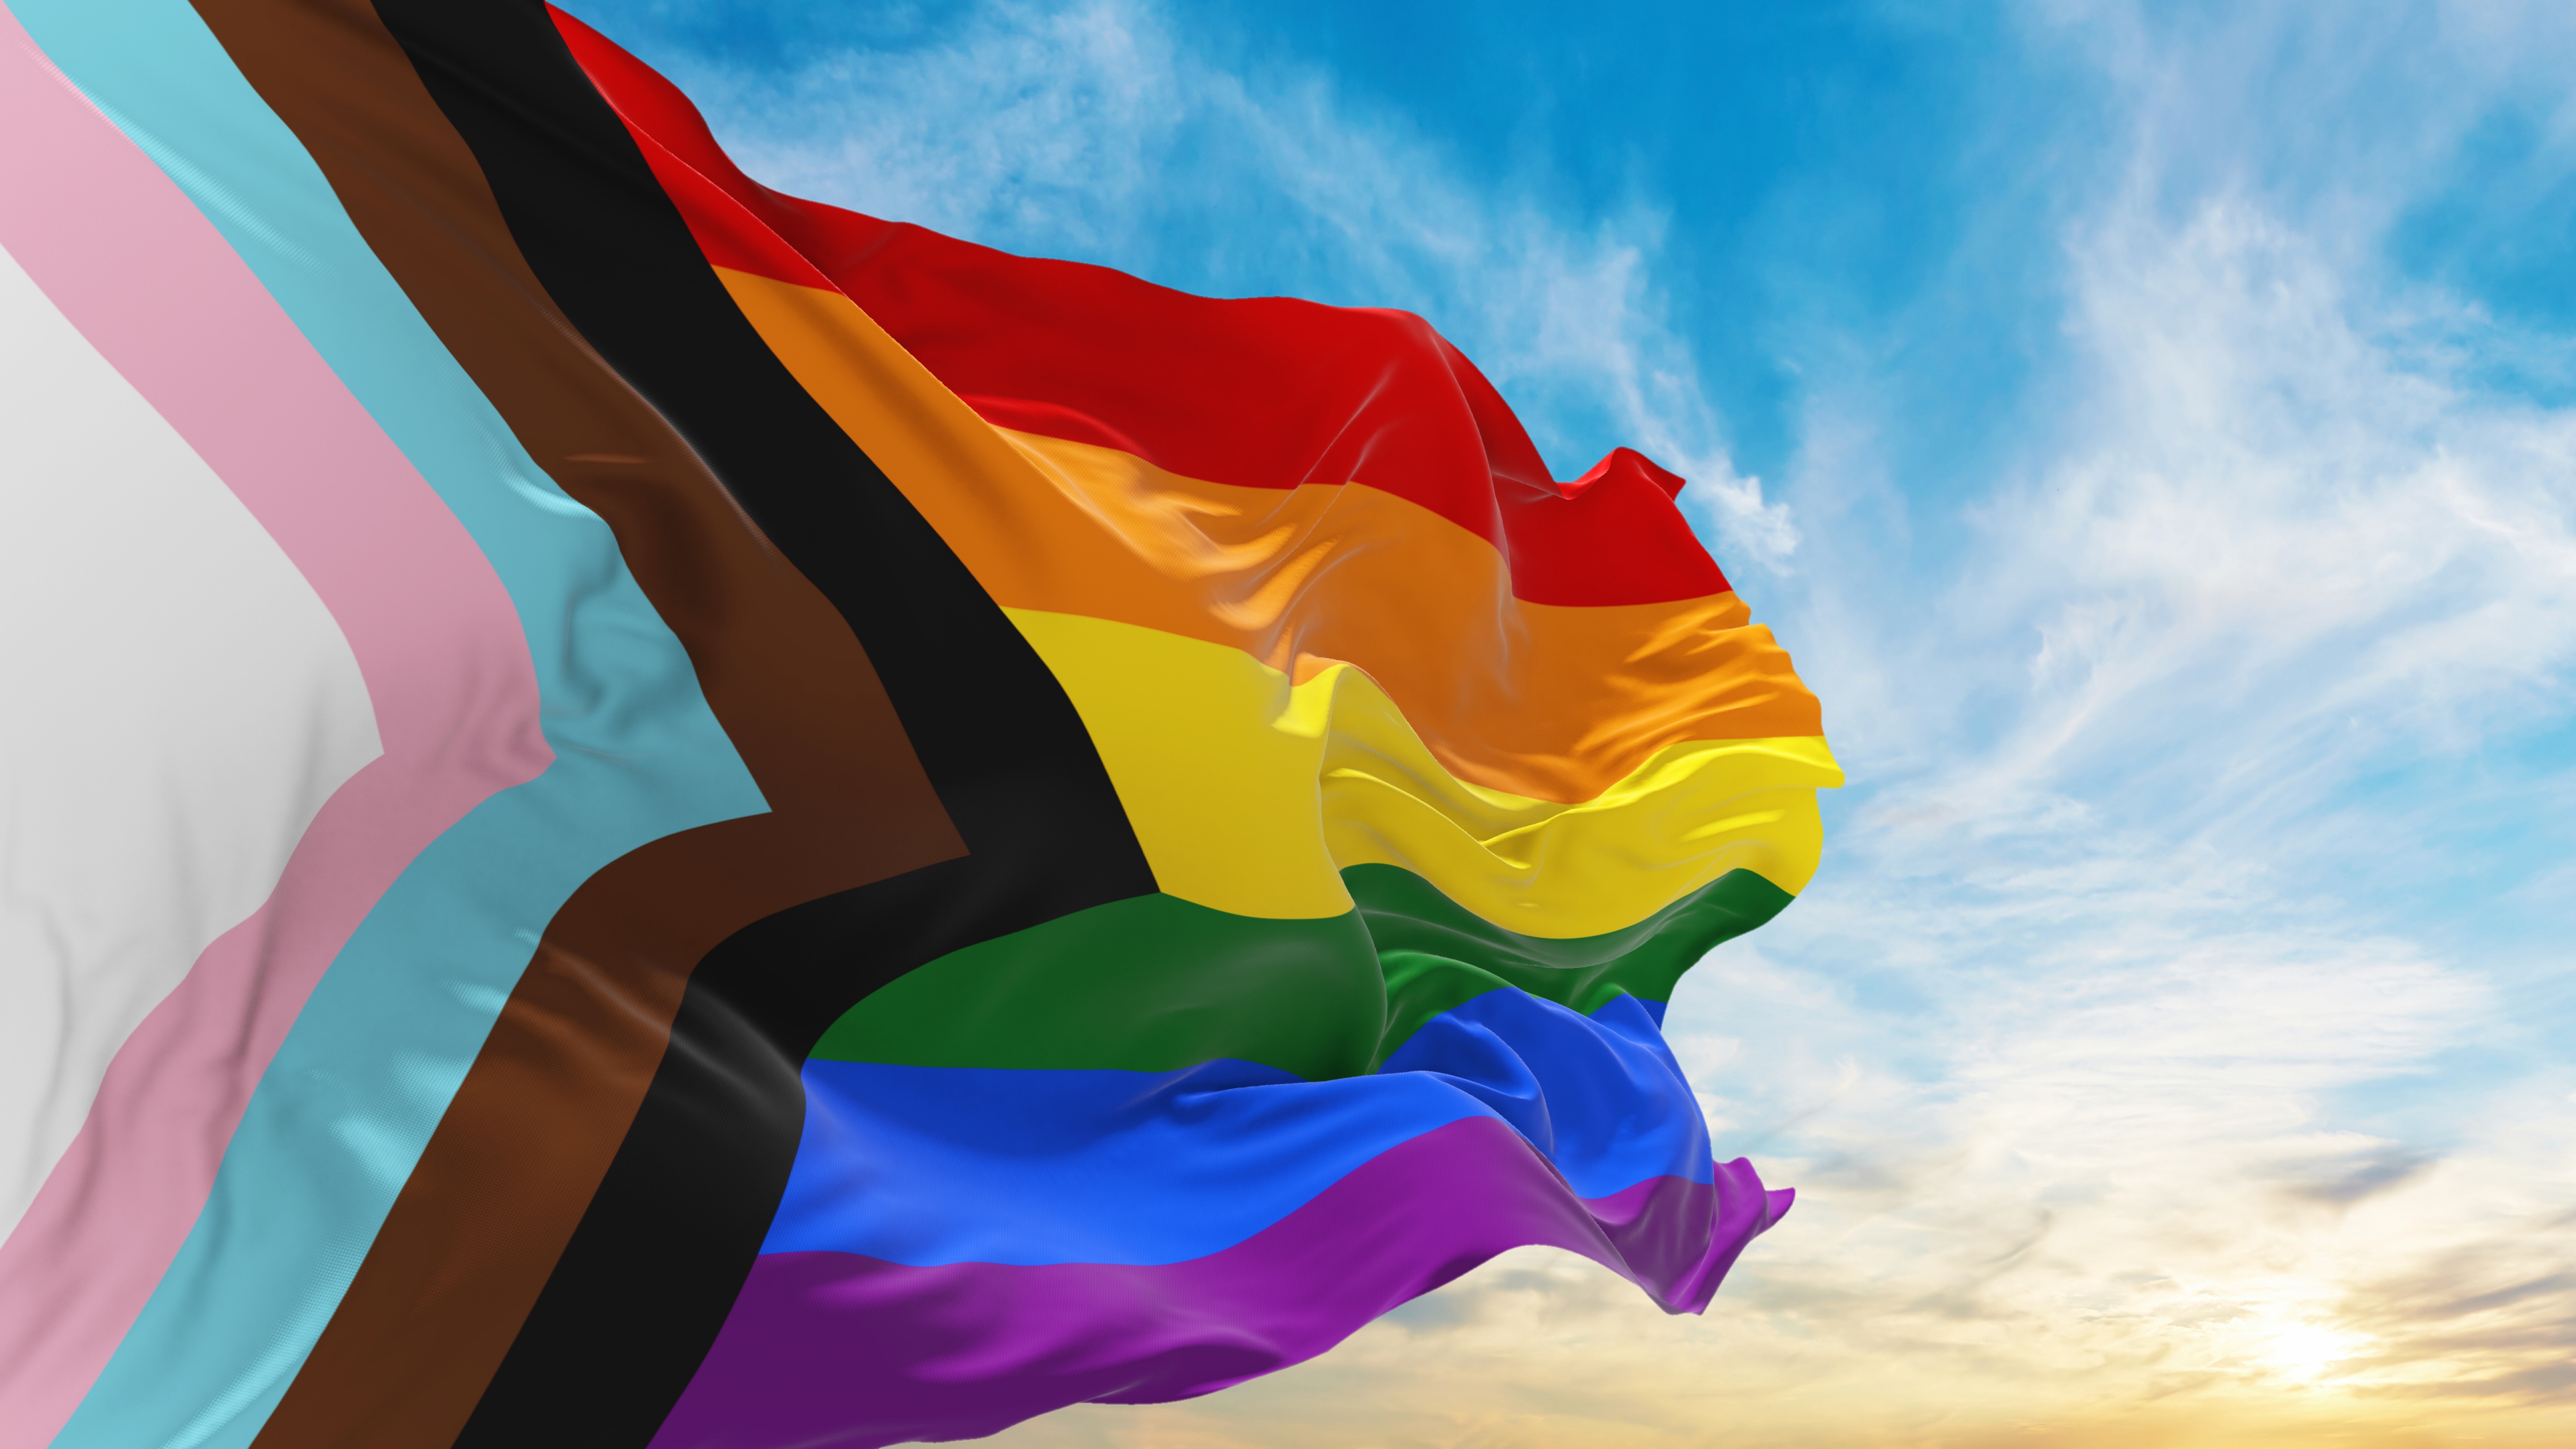 Free Pride Rainbow Wallpaper  Download in JPG  Templatenet